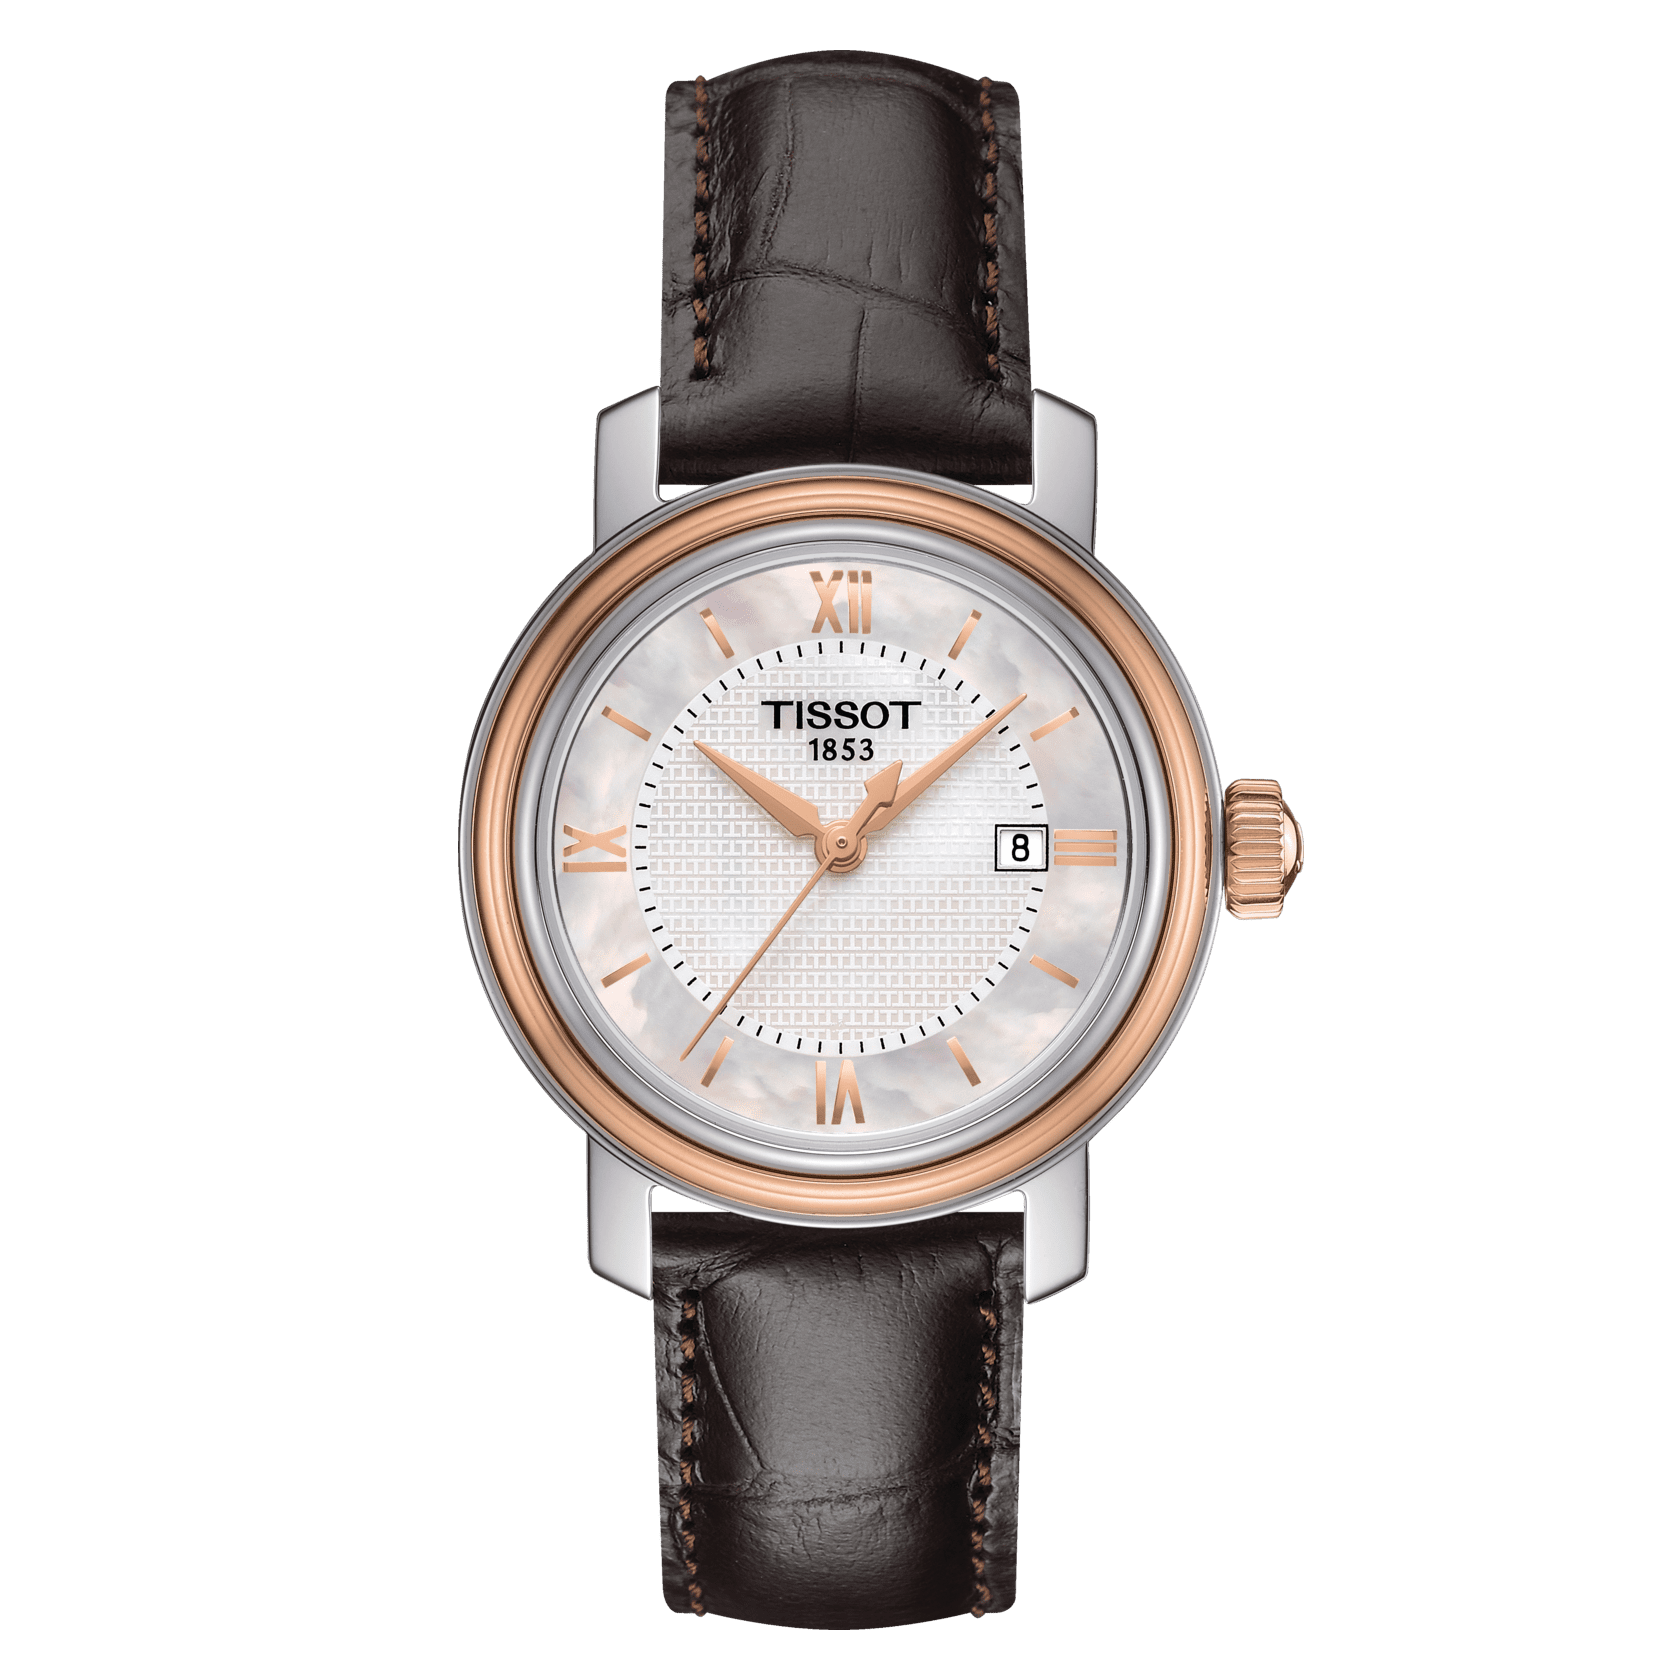 Vacheron Constantin Replicas Watch